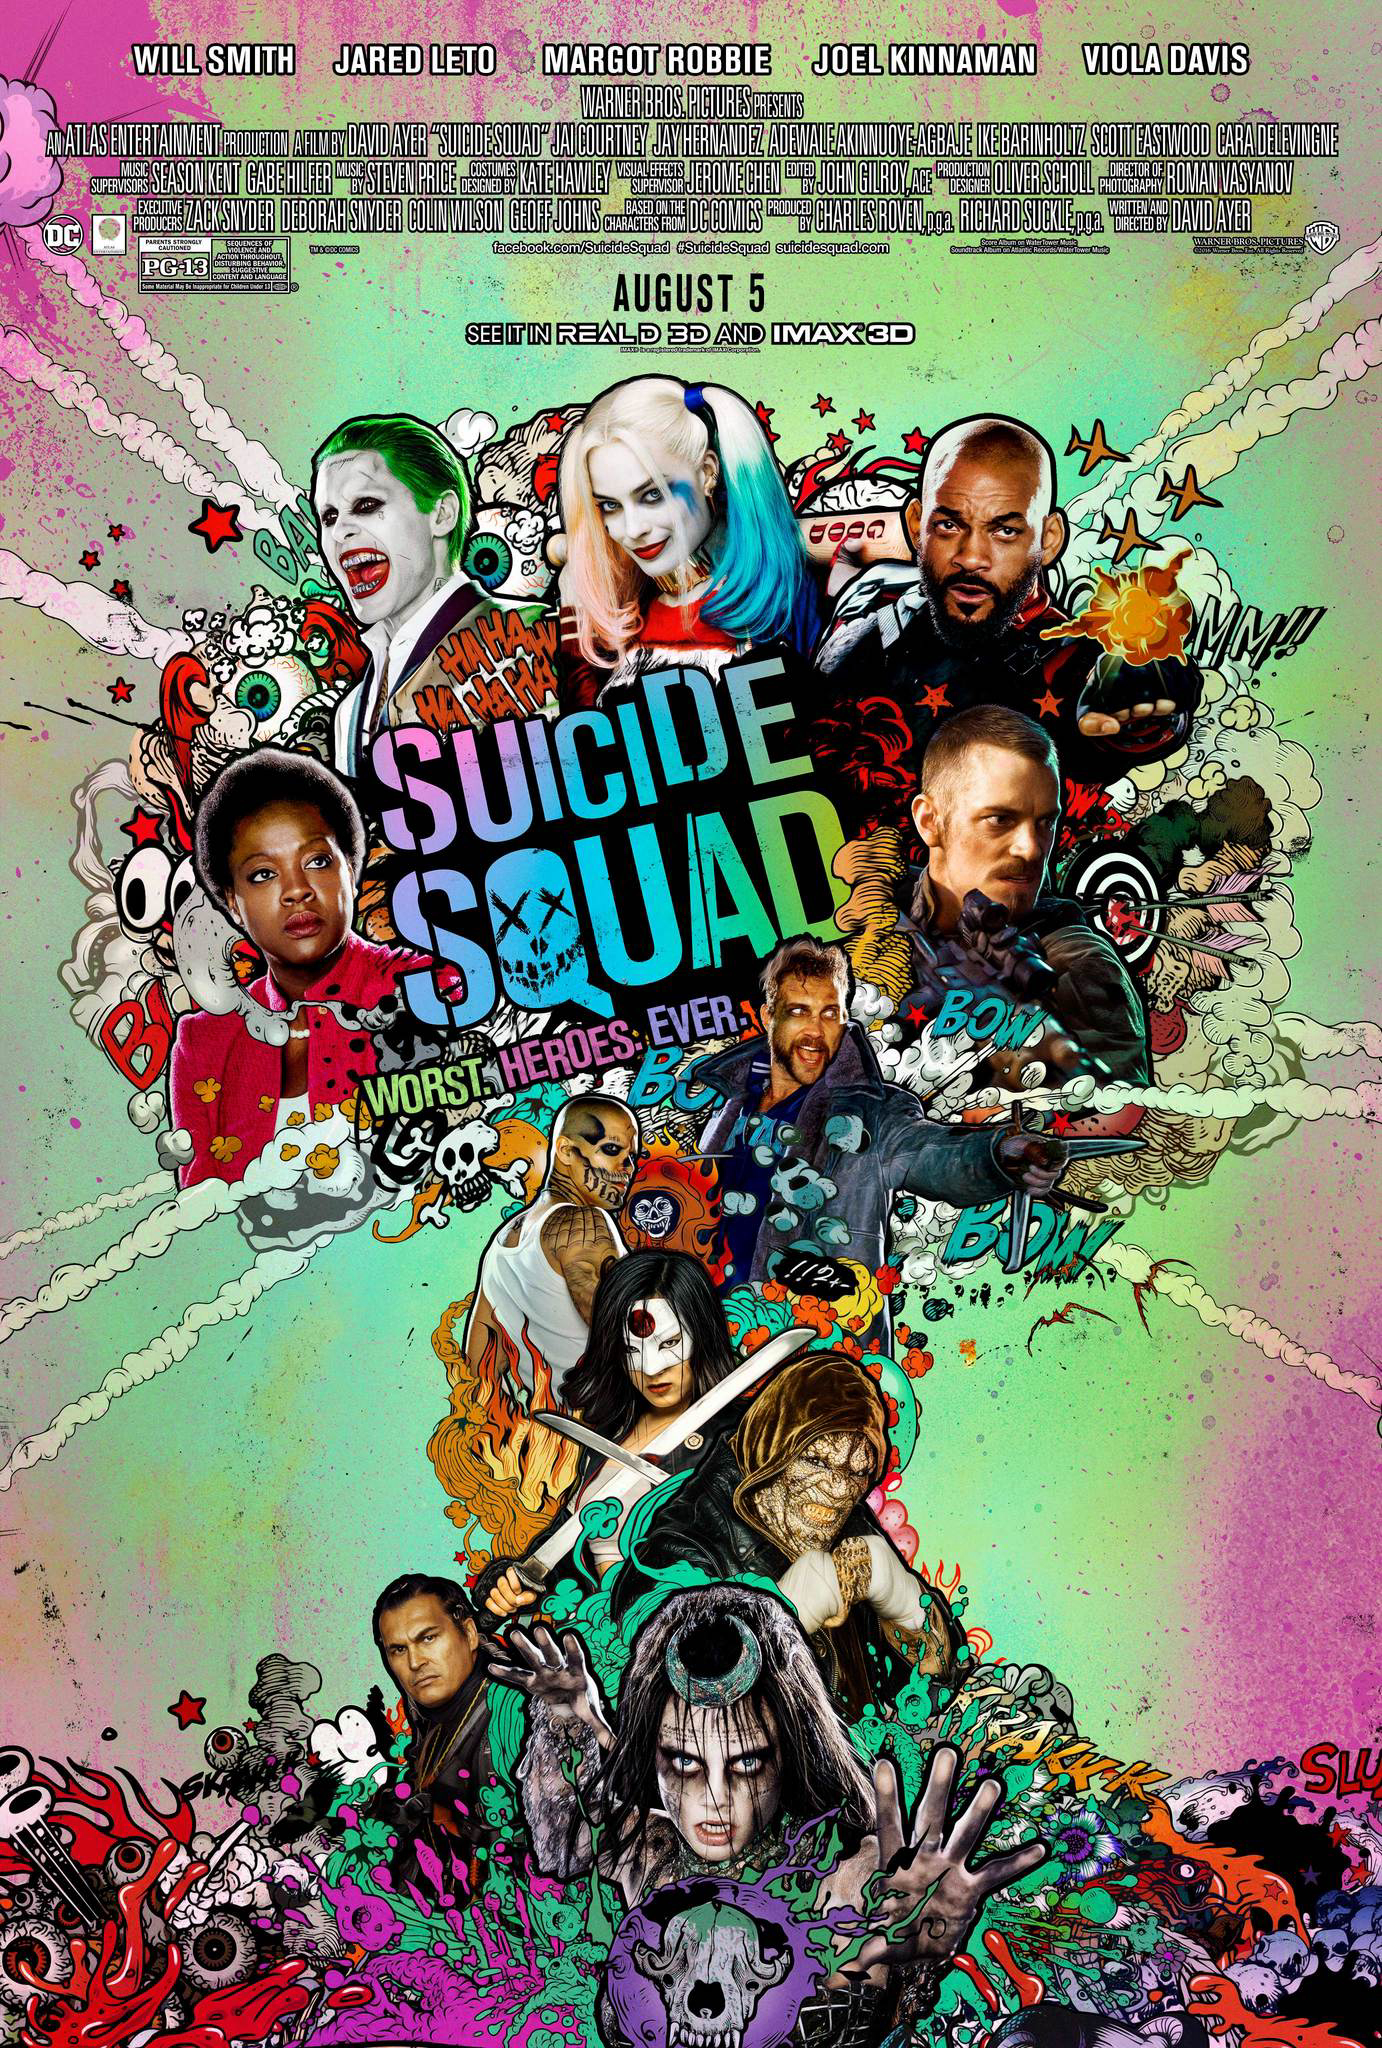 Poster Phim Biệt Đội Cảm Tử (Suicide Squad)